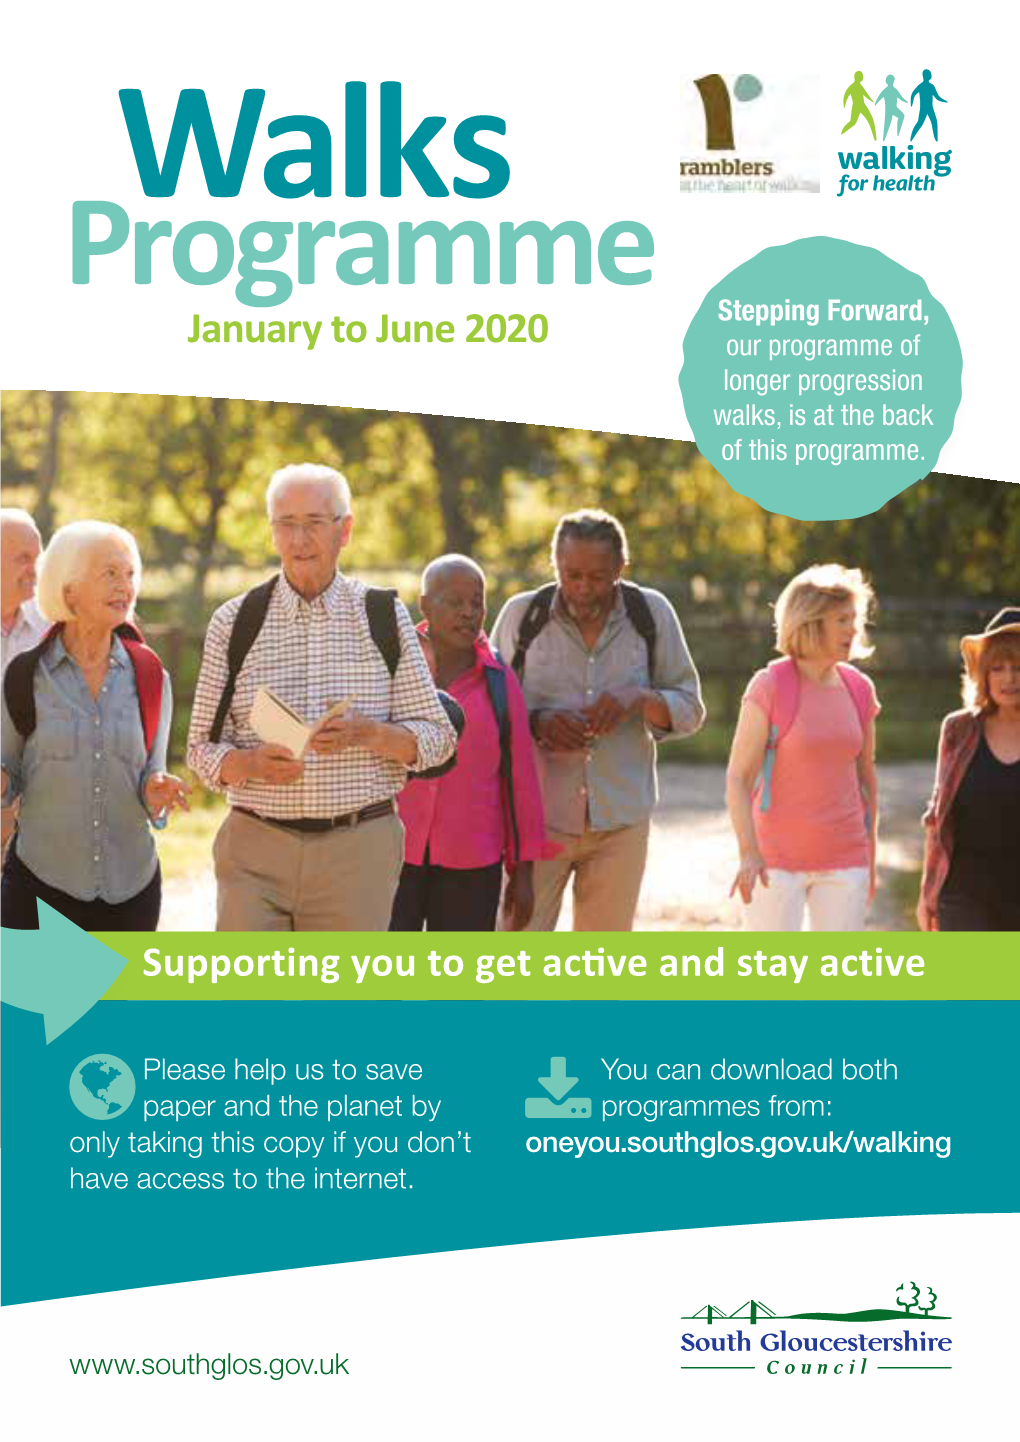 Walk for Health Walks Programme – January to June 2020